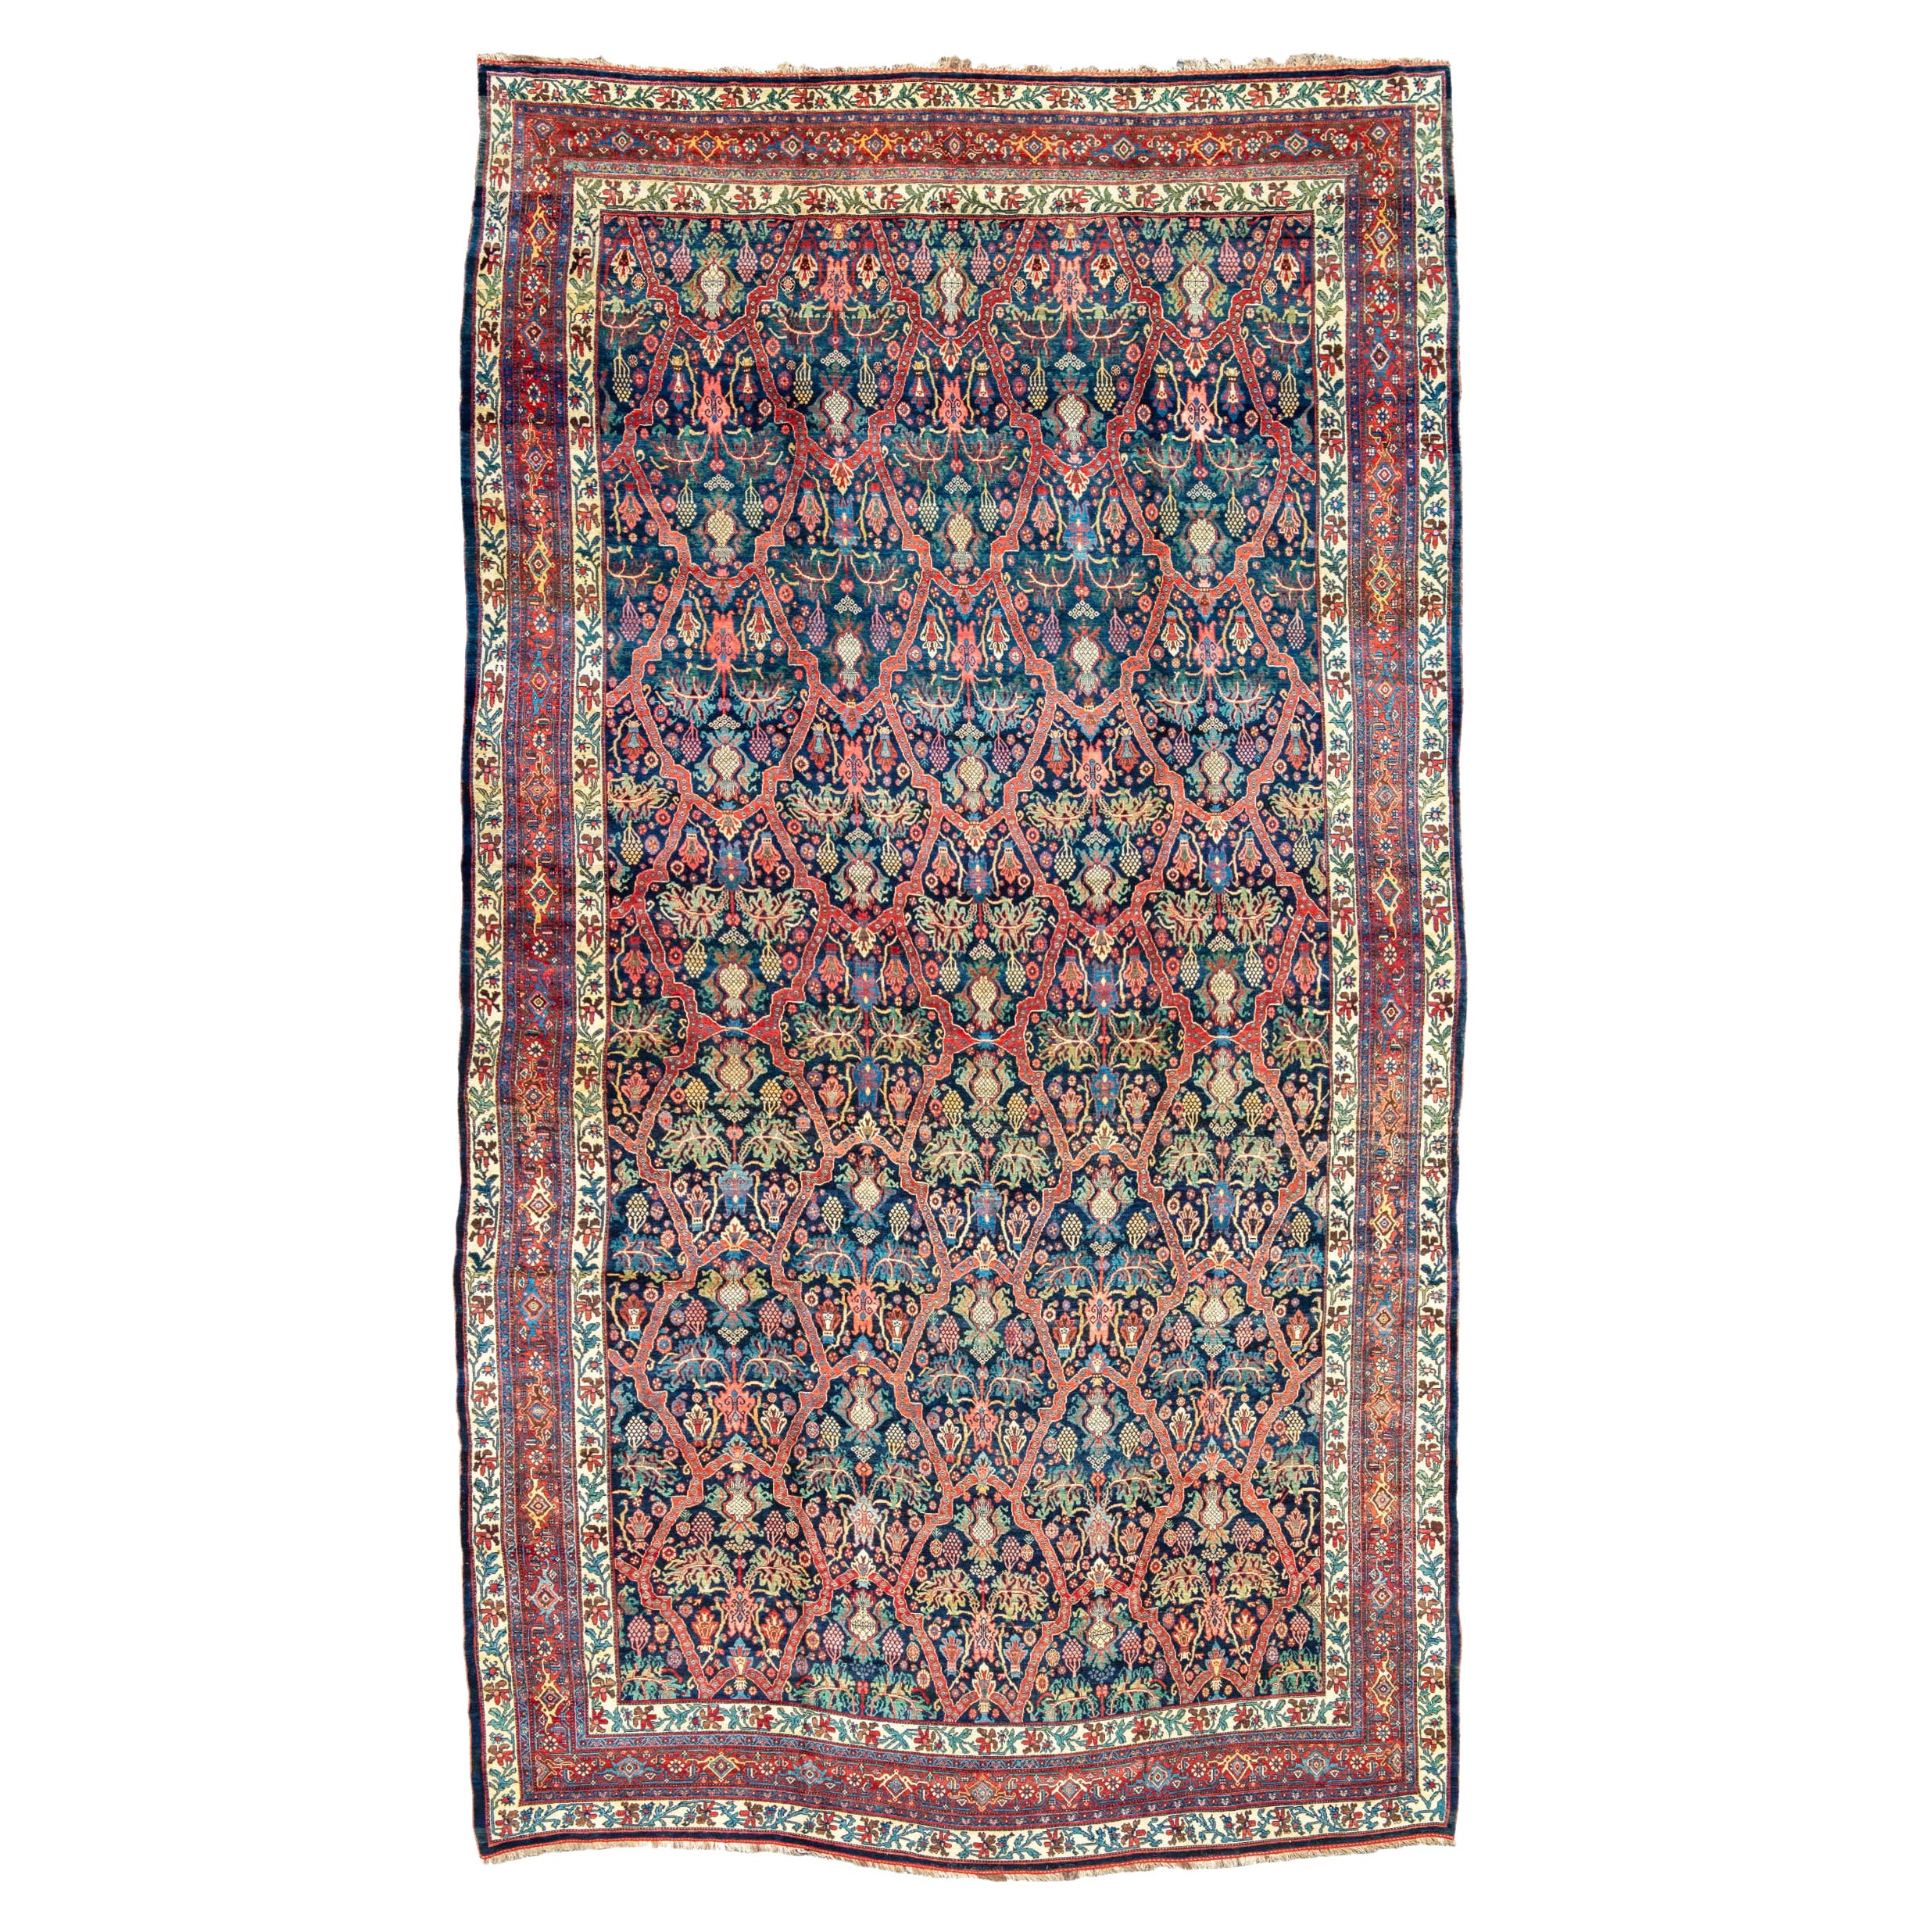 Grand tapis persan ancien Bidjar, fin du 19ème siècle